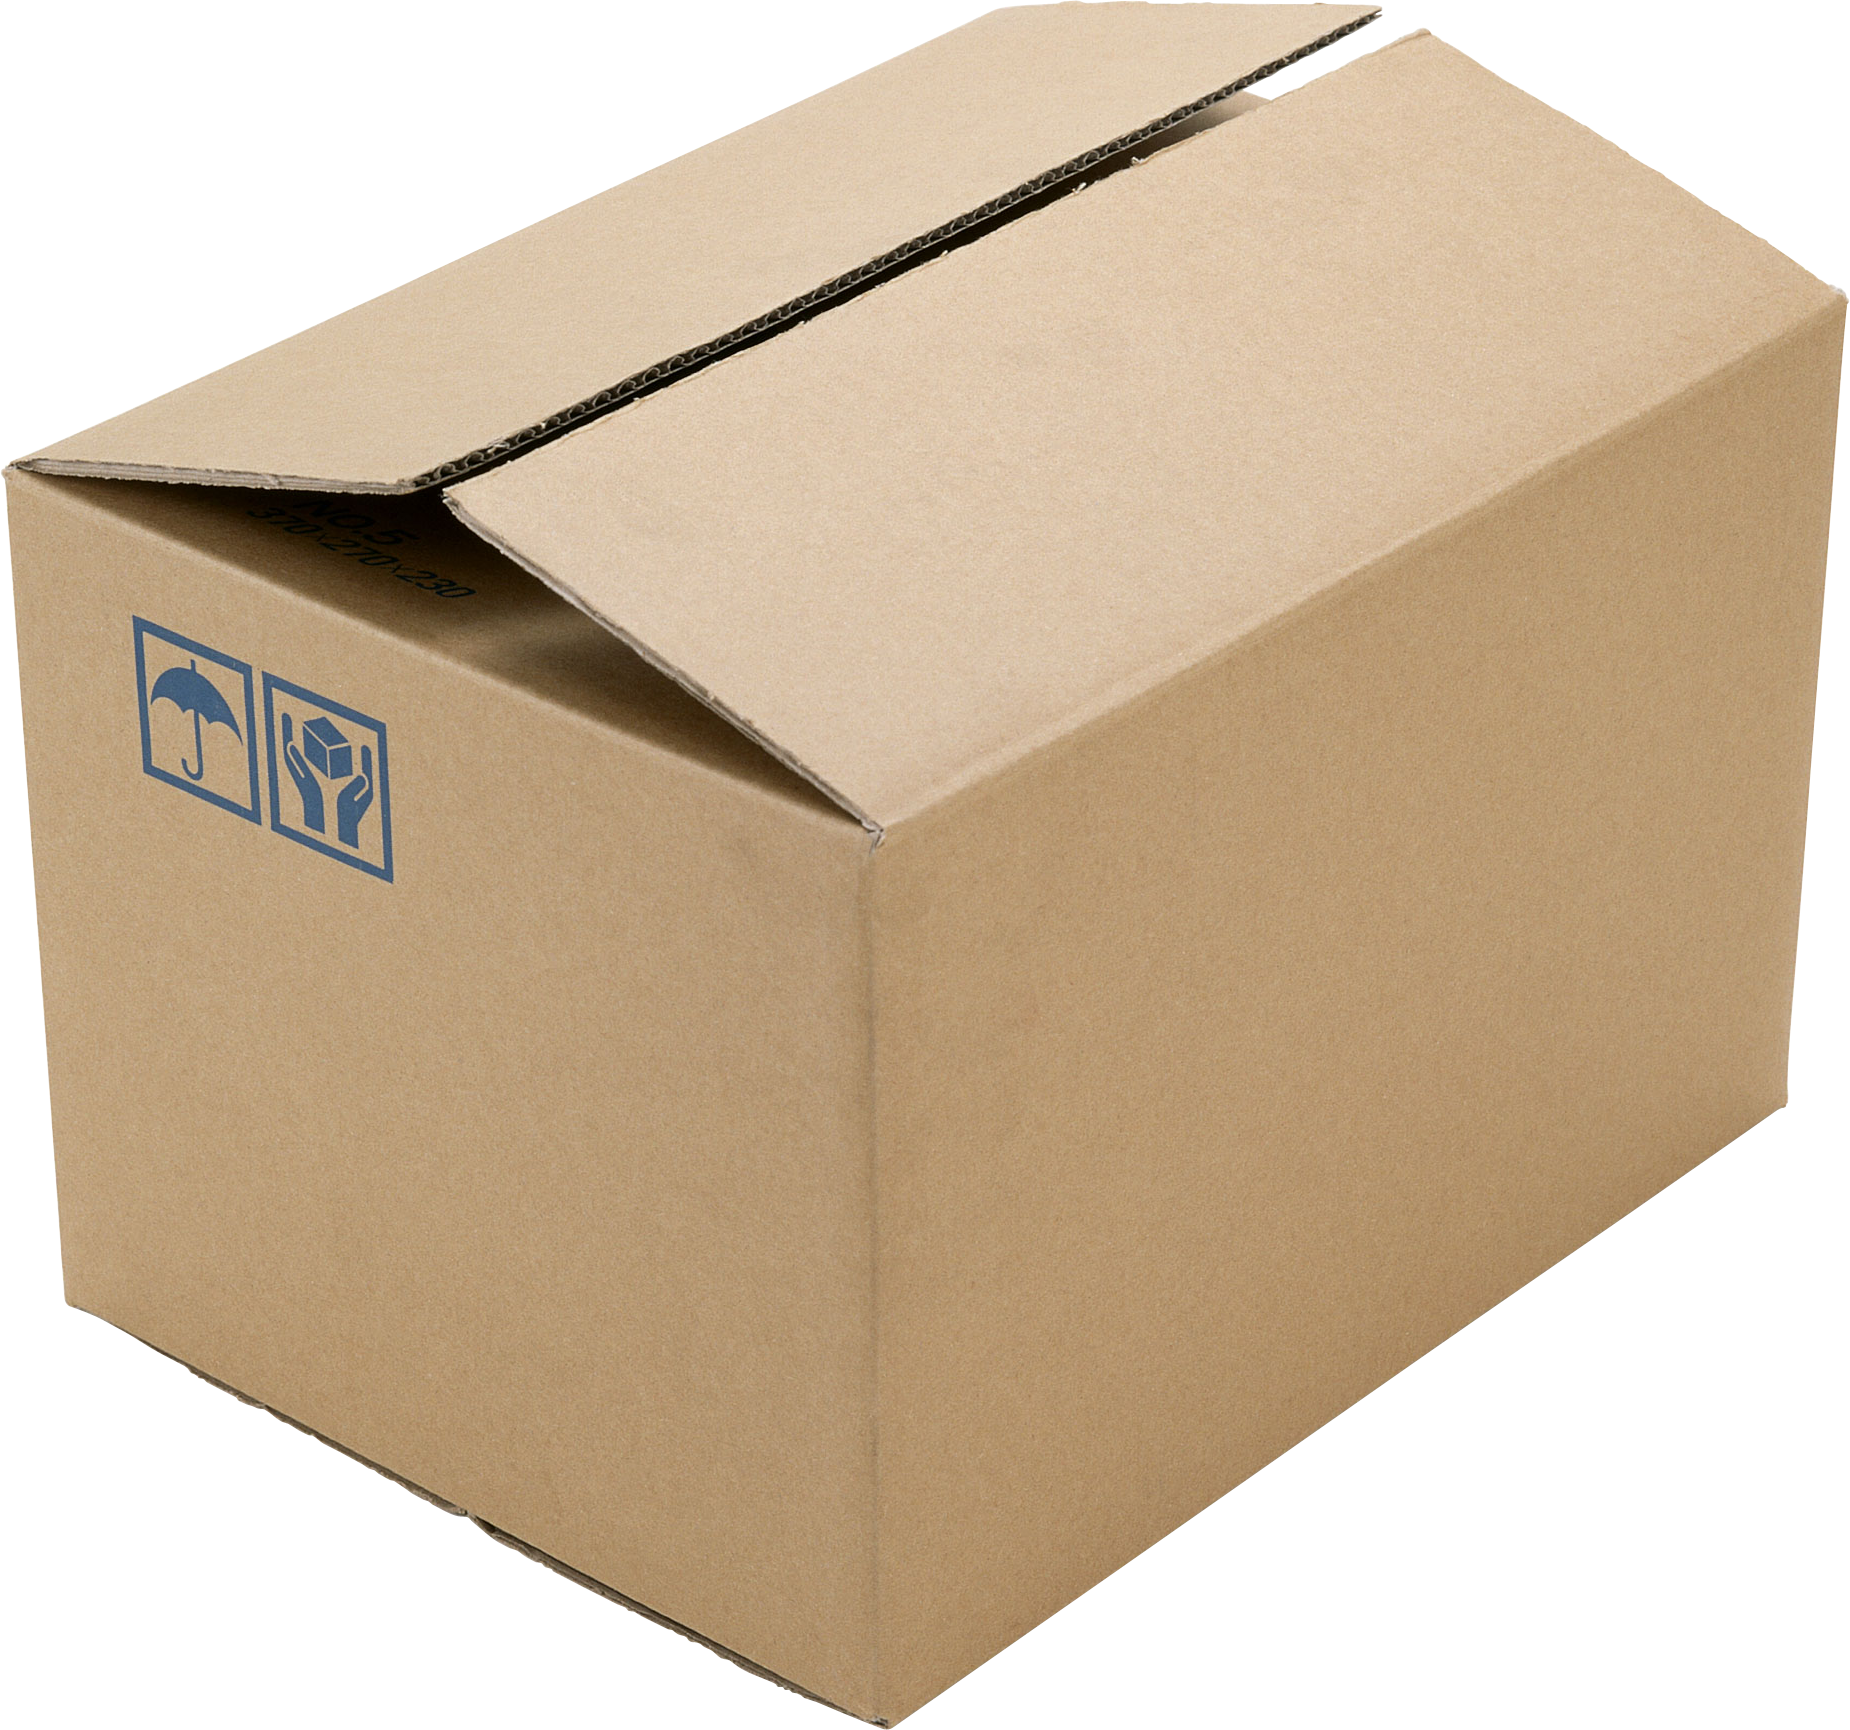 Shipping Box Png 1850 X 1730